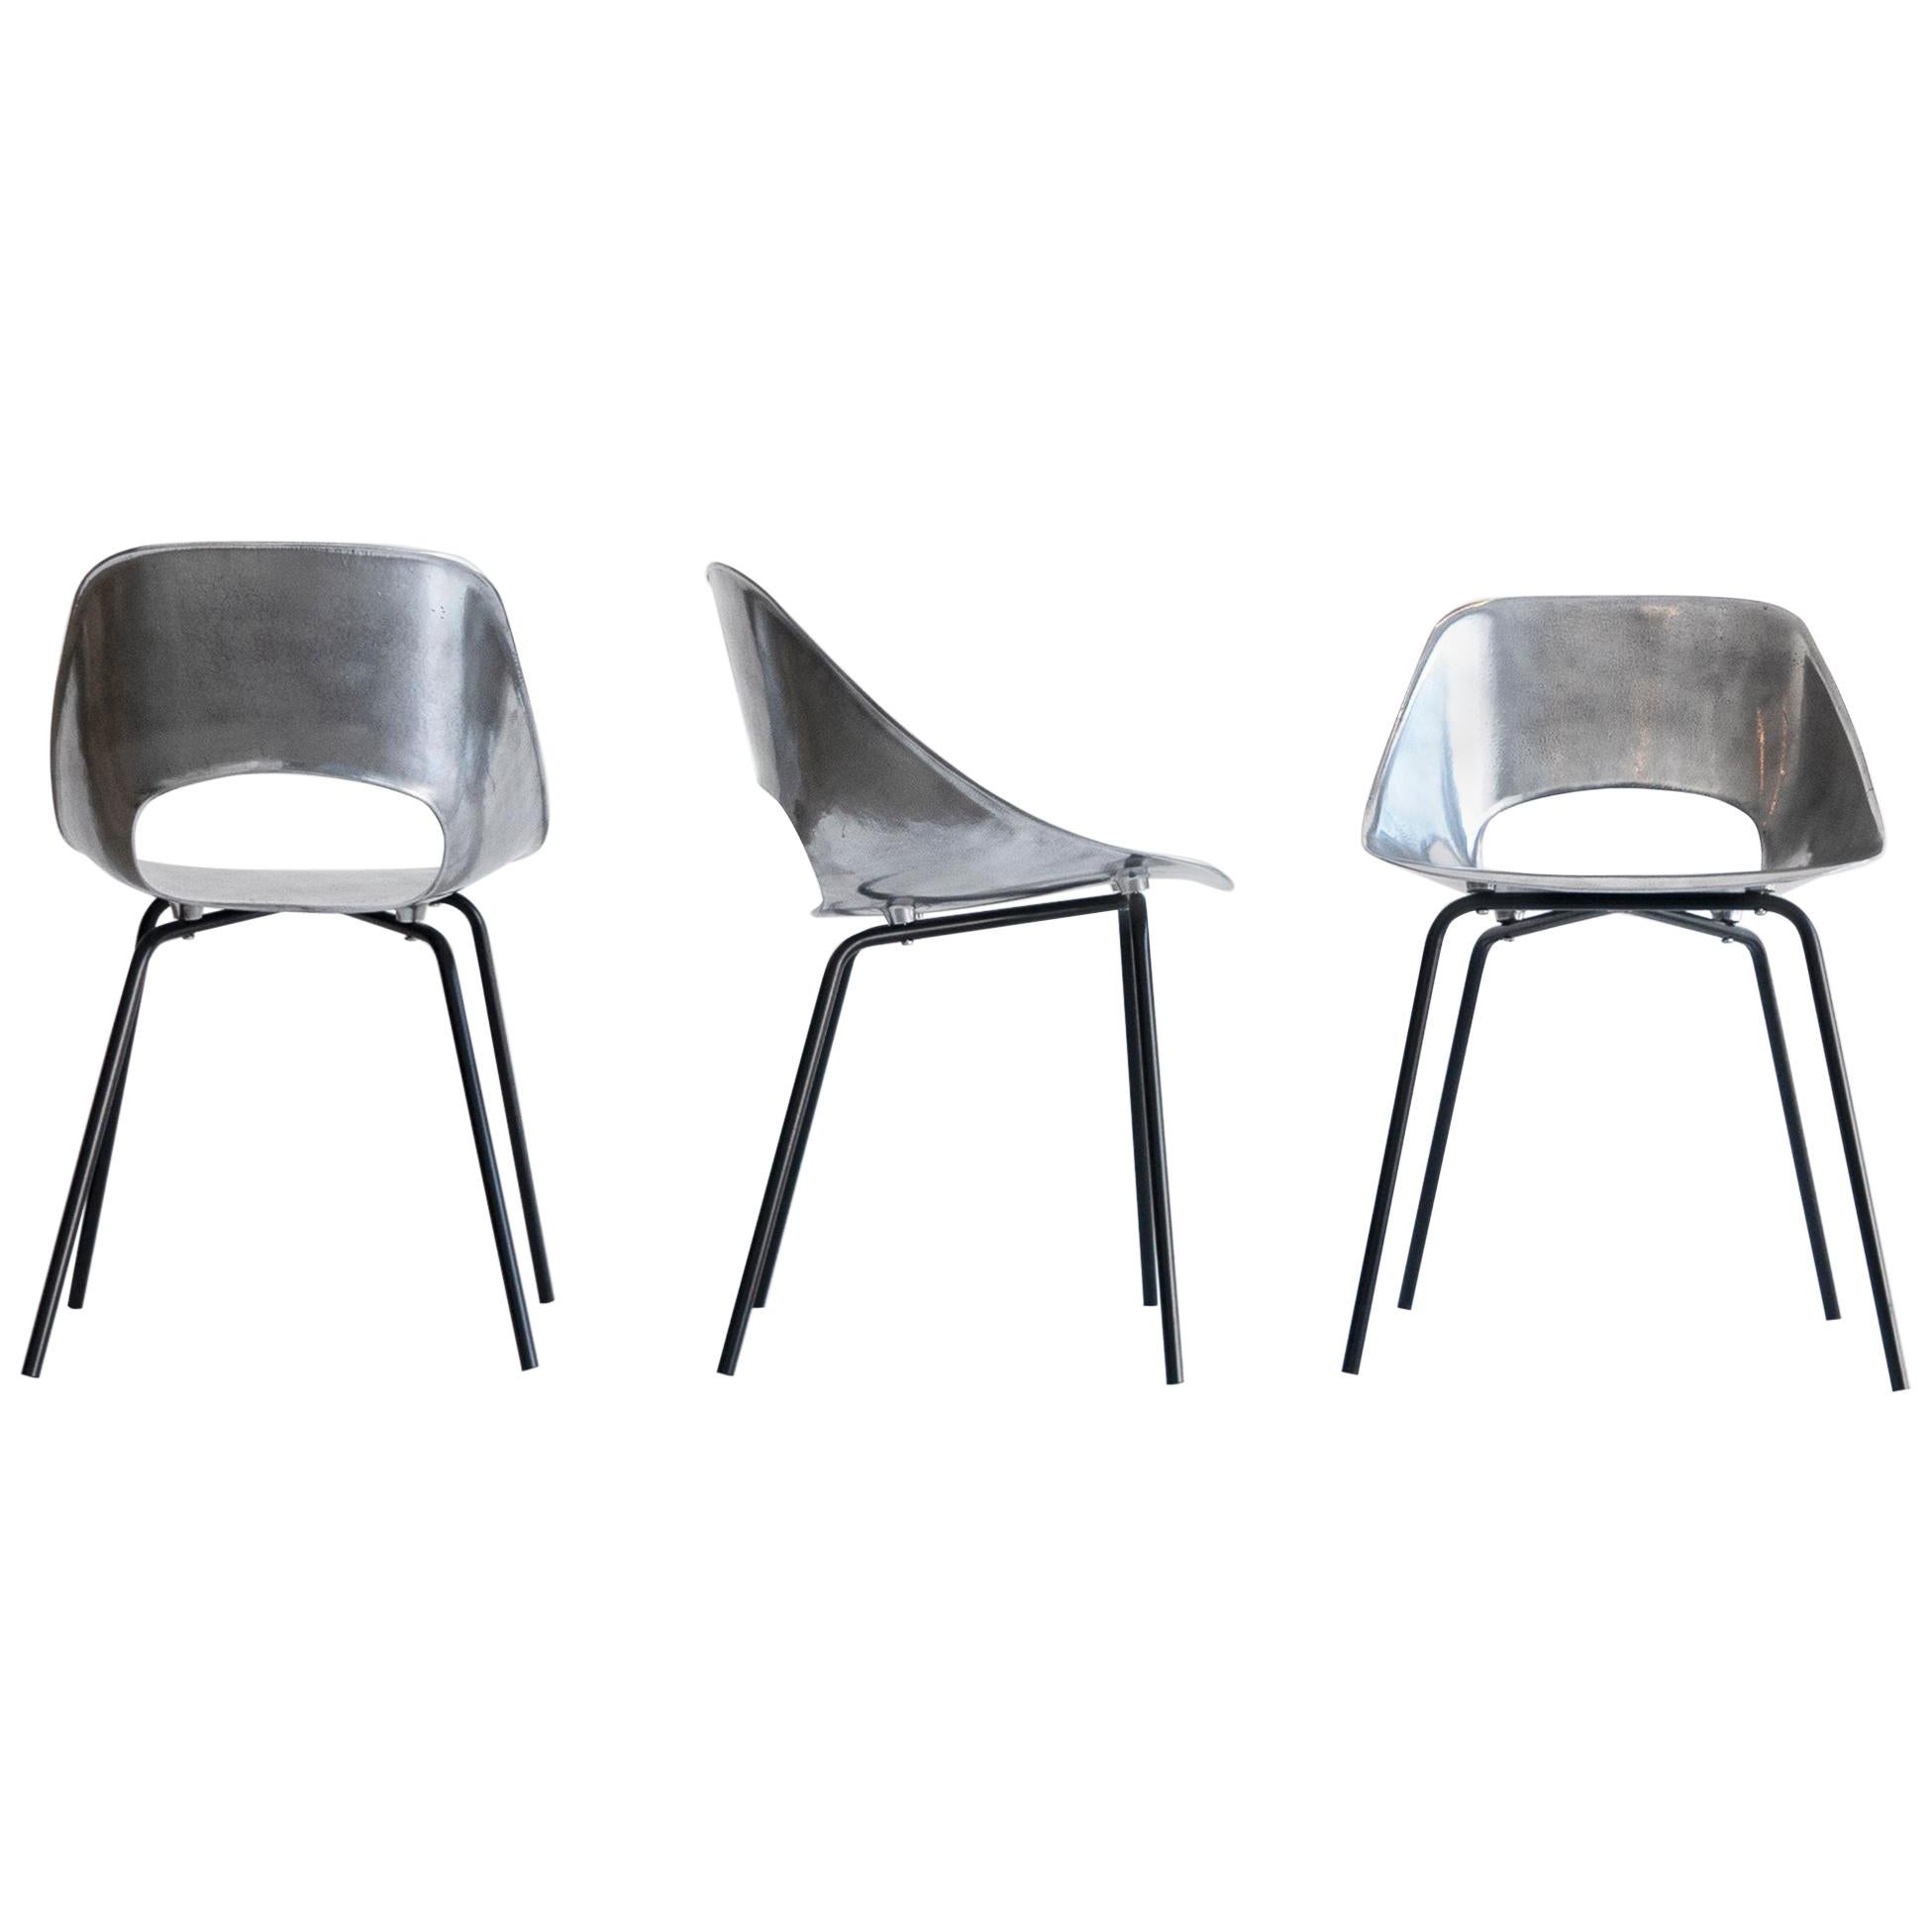 Pierre Guariche, Set of Three "Tonneau" Cast Aluminum Chairs, circa 1950-1959